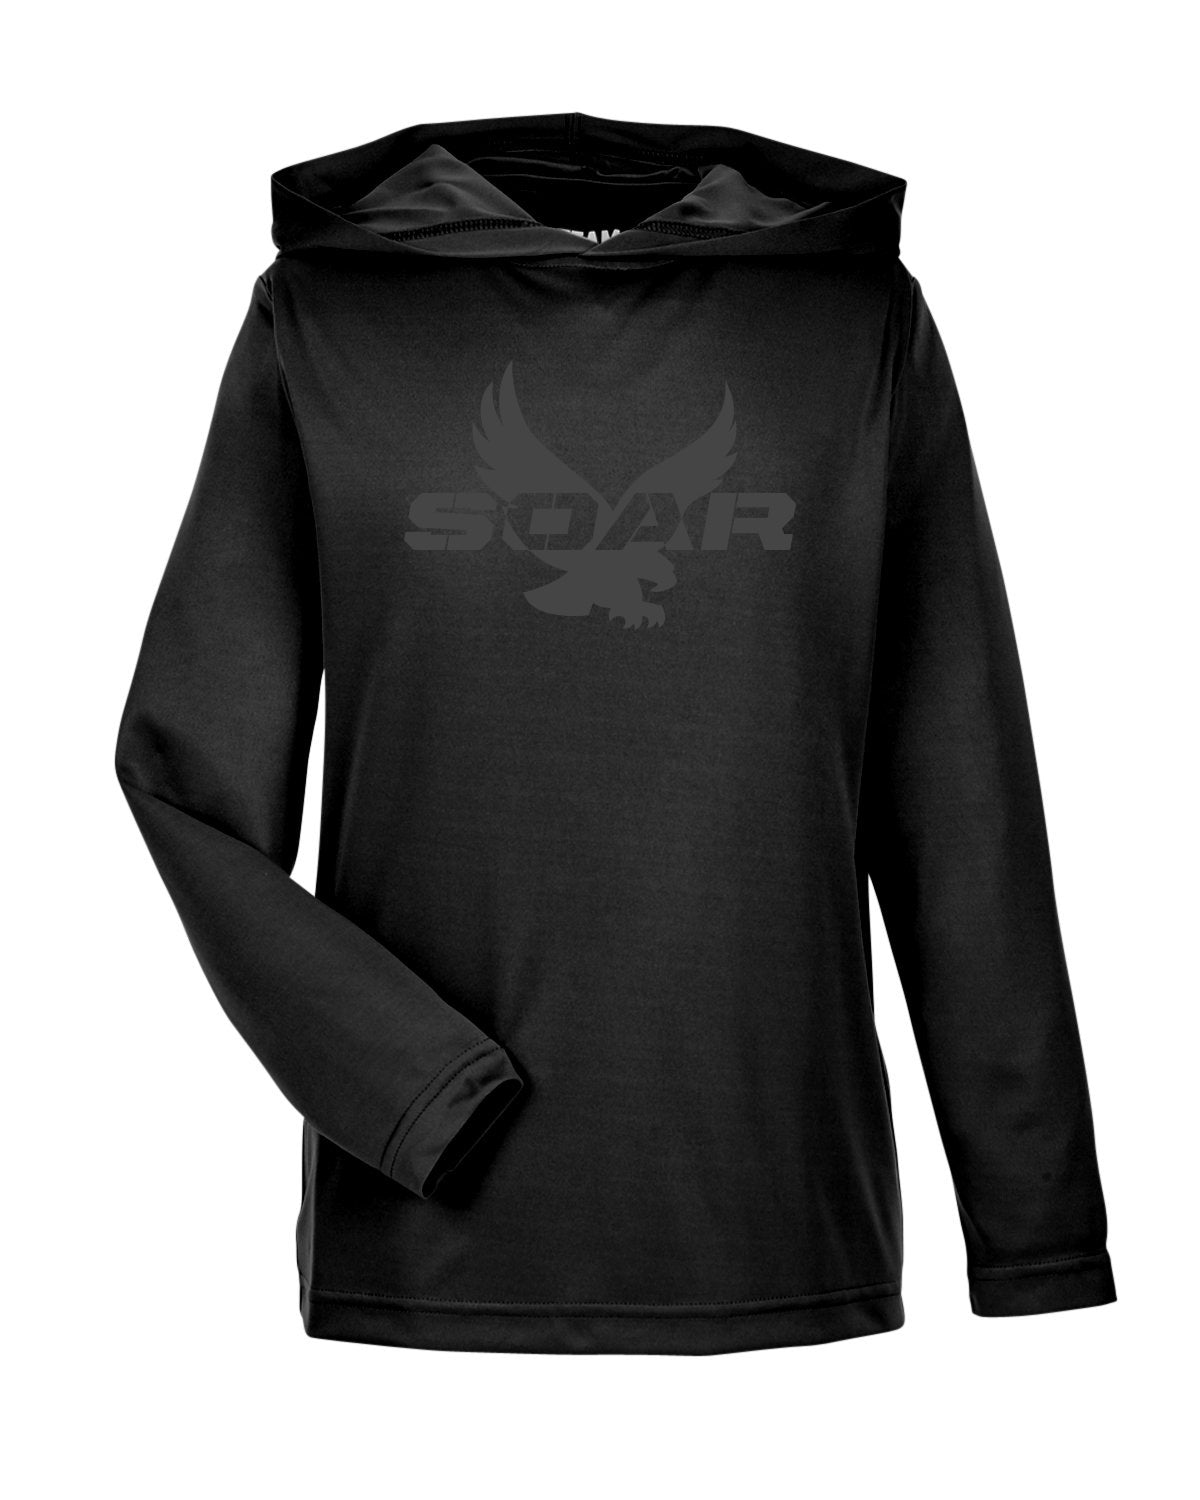 TT41Y - SOAR SPIRIT - Youth Team 365 Zone Performance Hooded TShirt